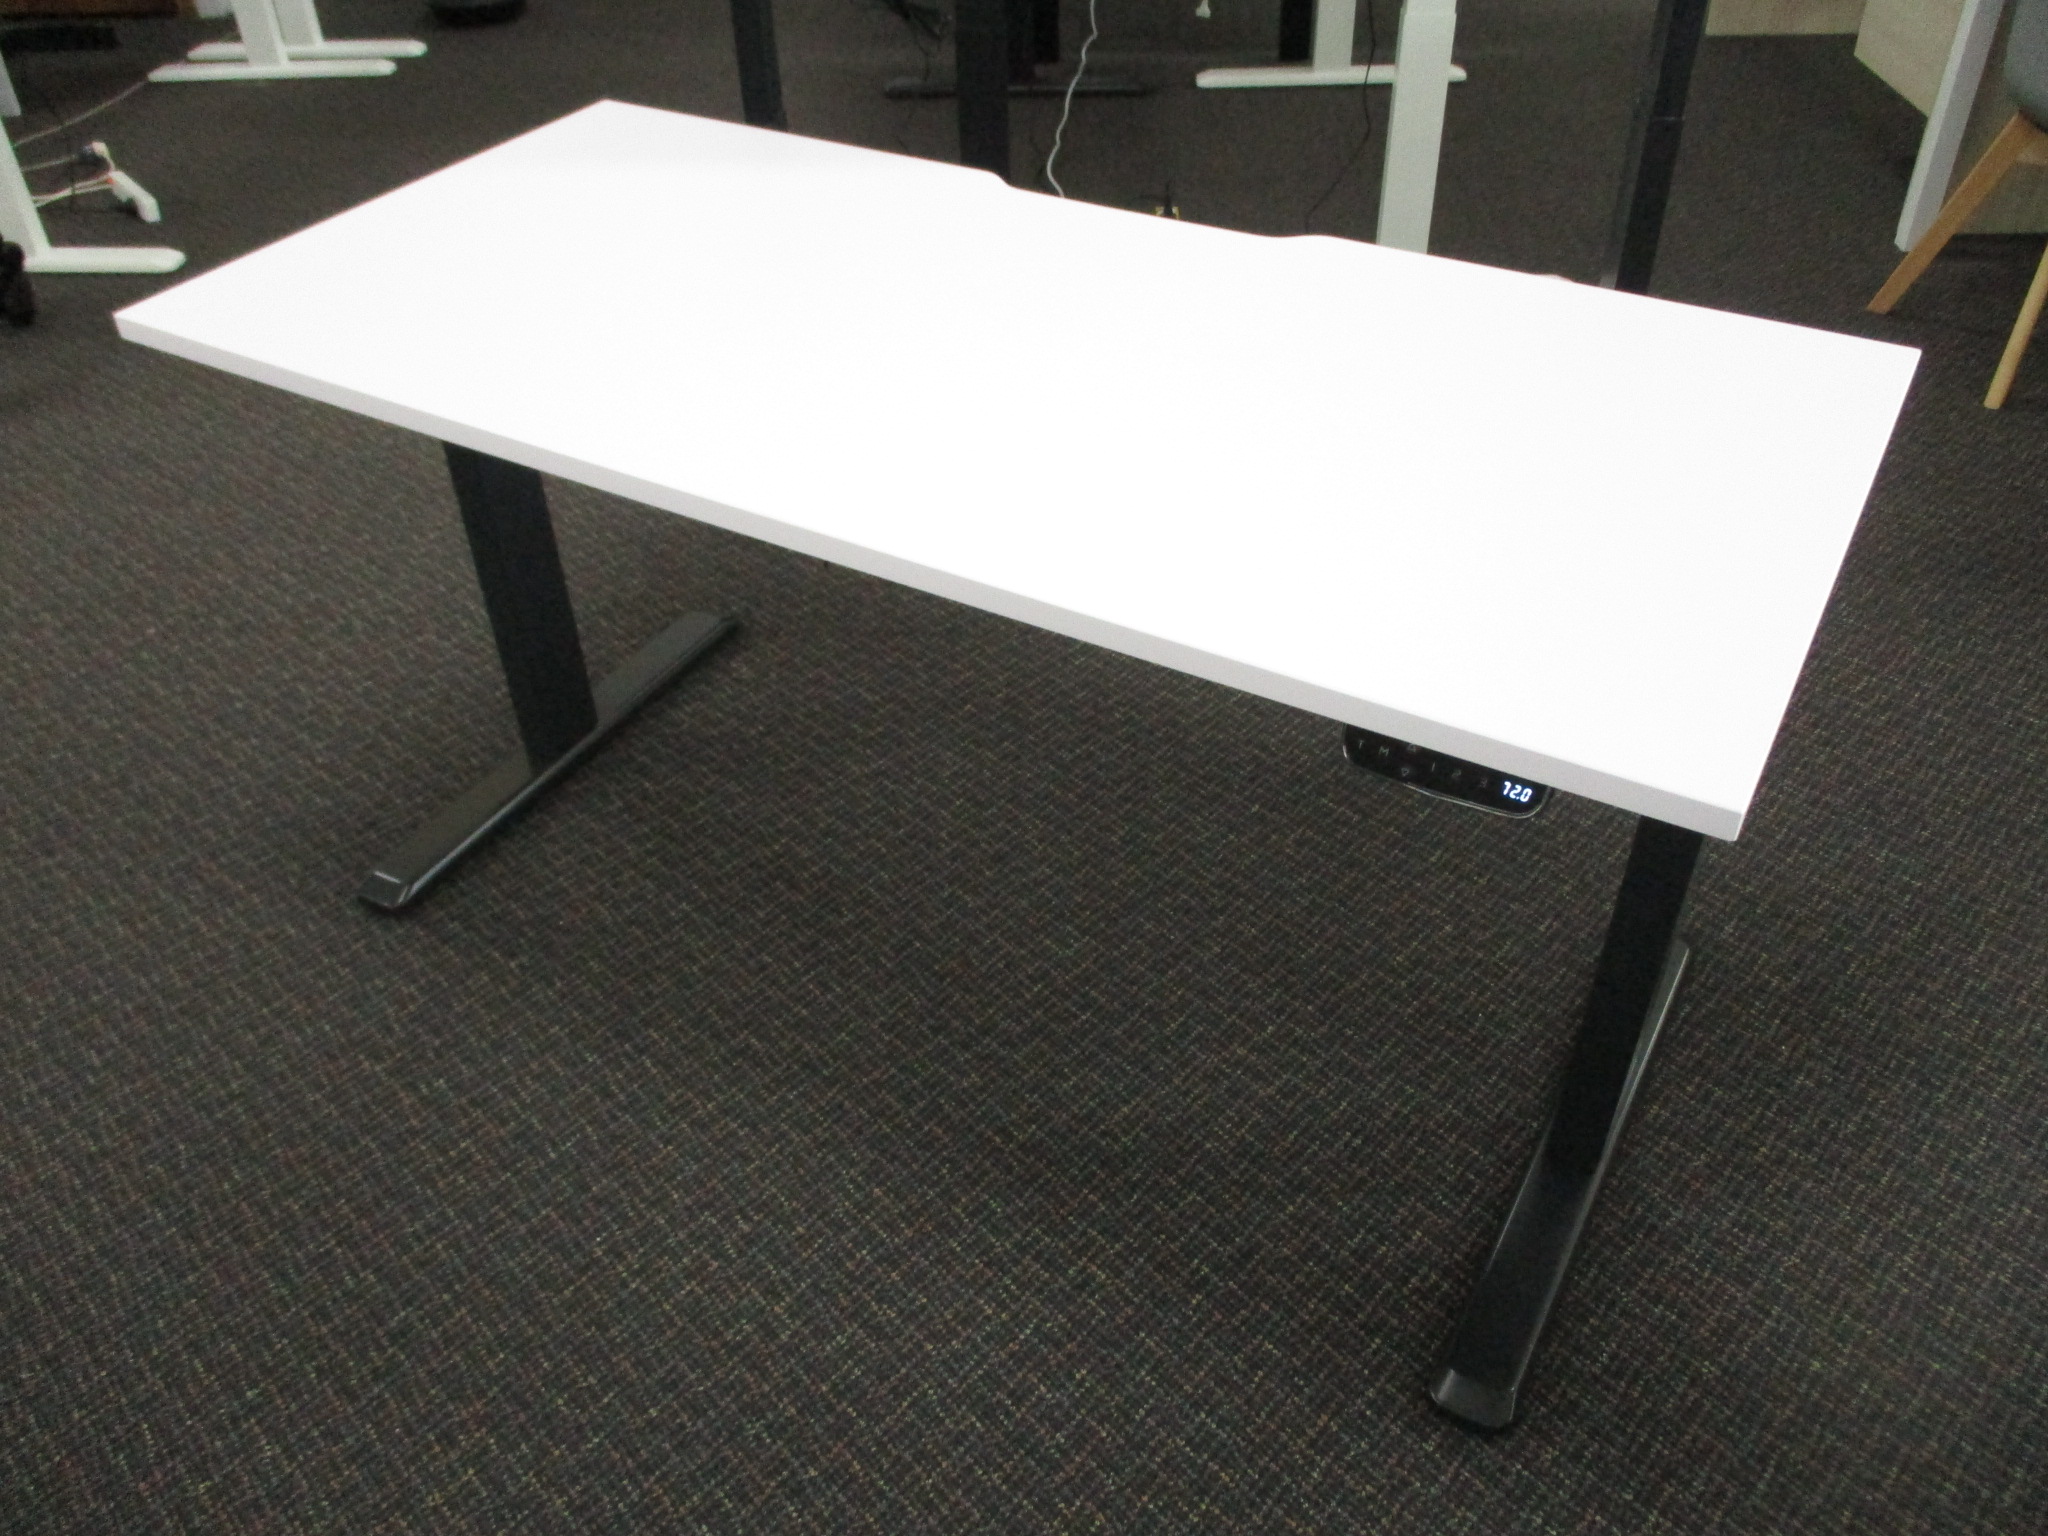 New Electronic Height Adjustable Desks 1500×750 $690